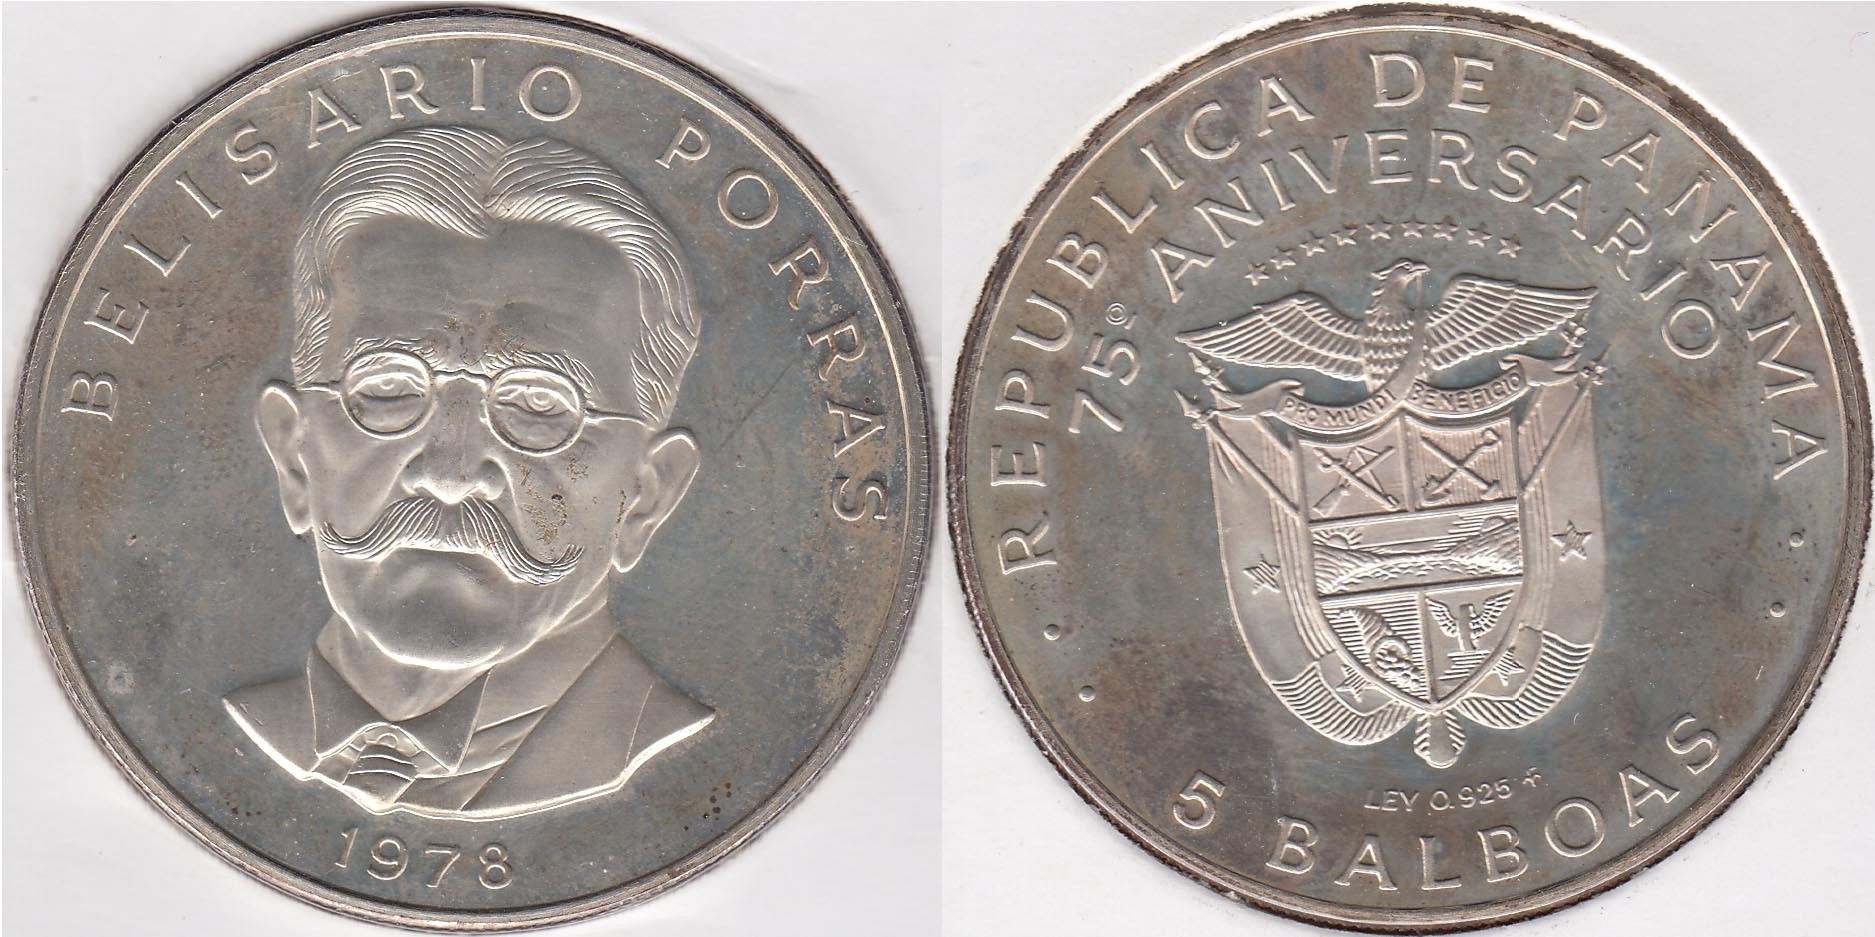 PANAMA. 5 BALBOAS DE 1978. PLATA 0.925.